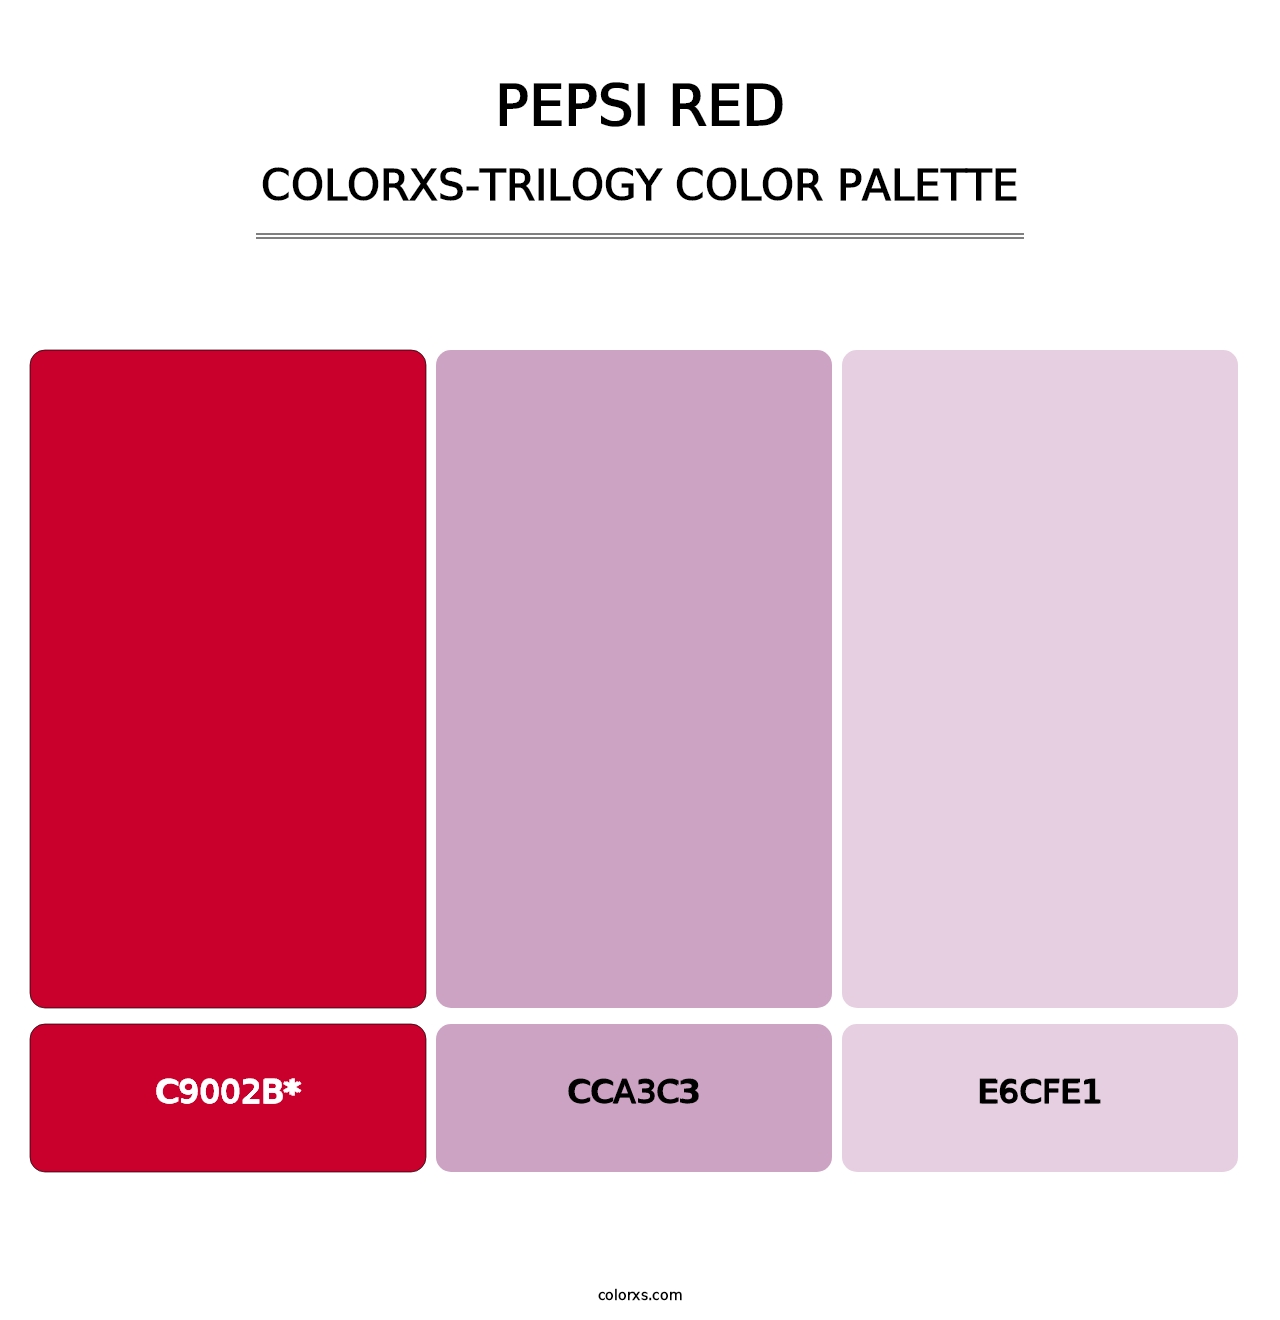 Pepsi Red - Colorxs Trilogy Palette